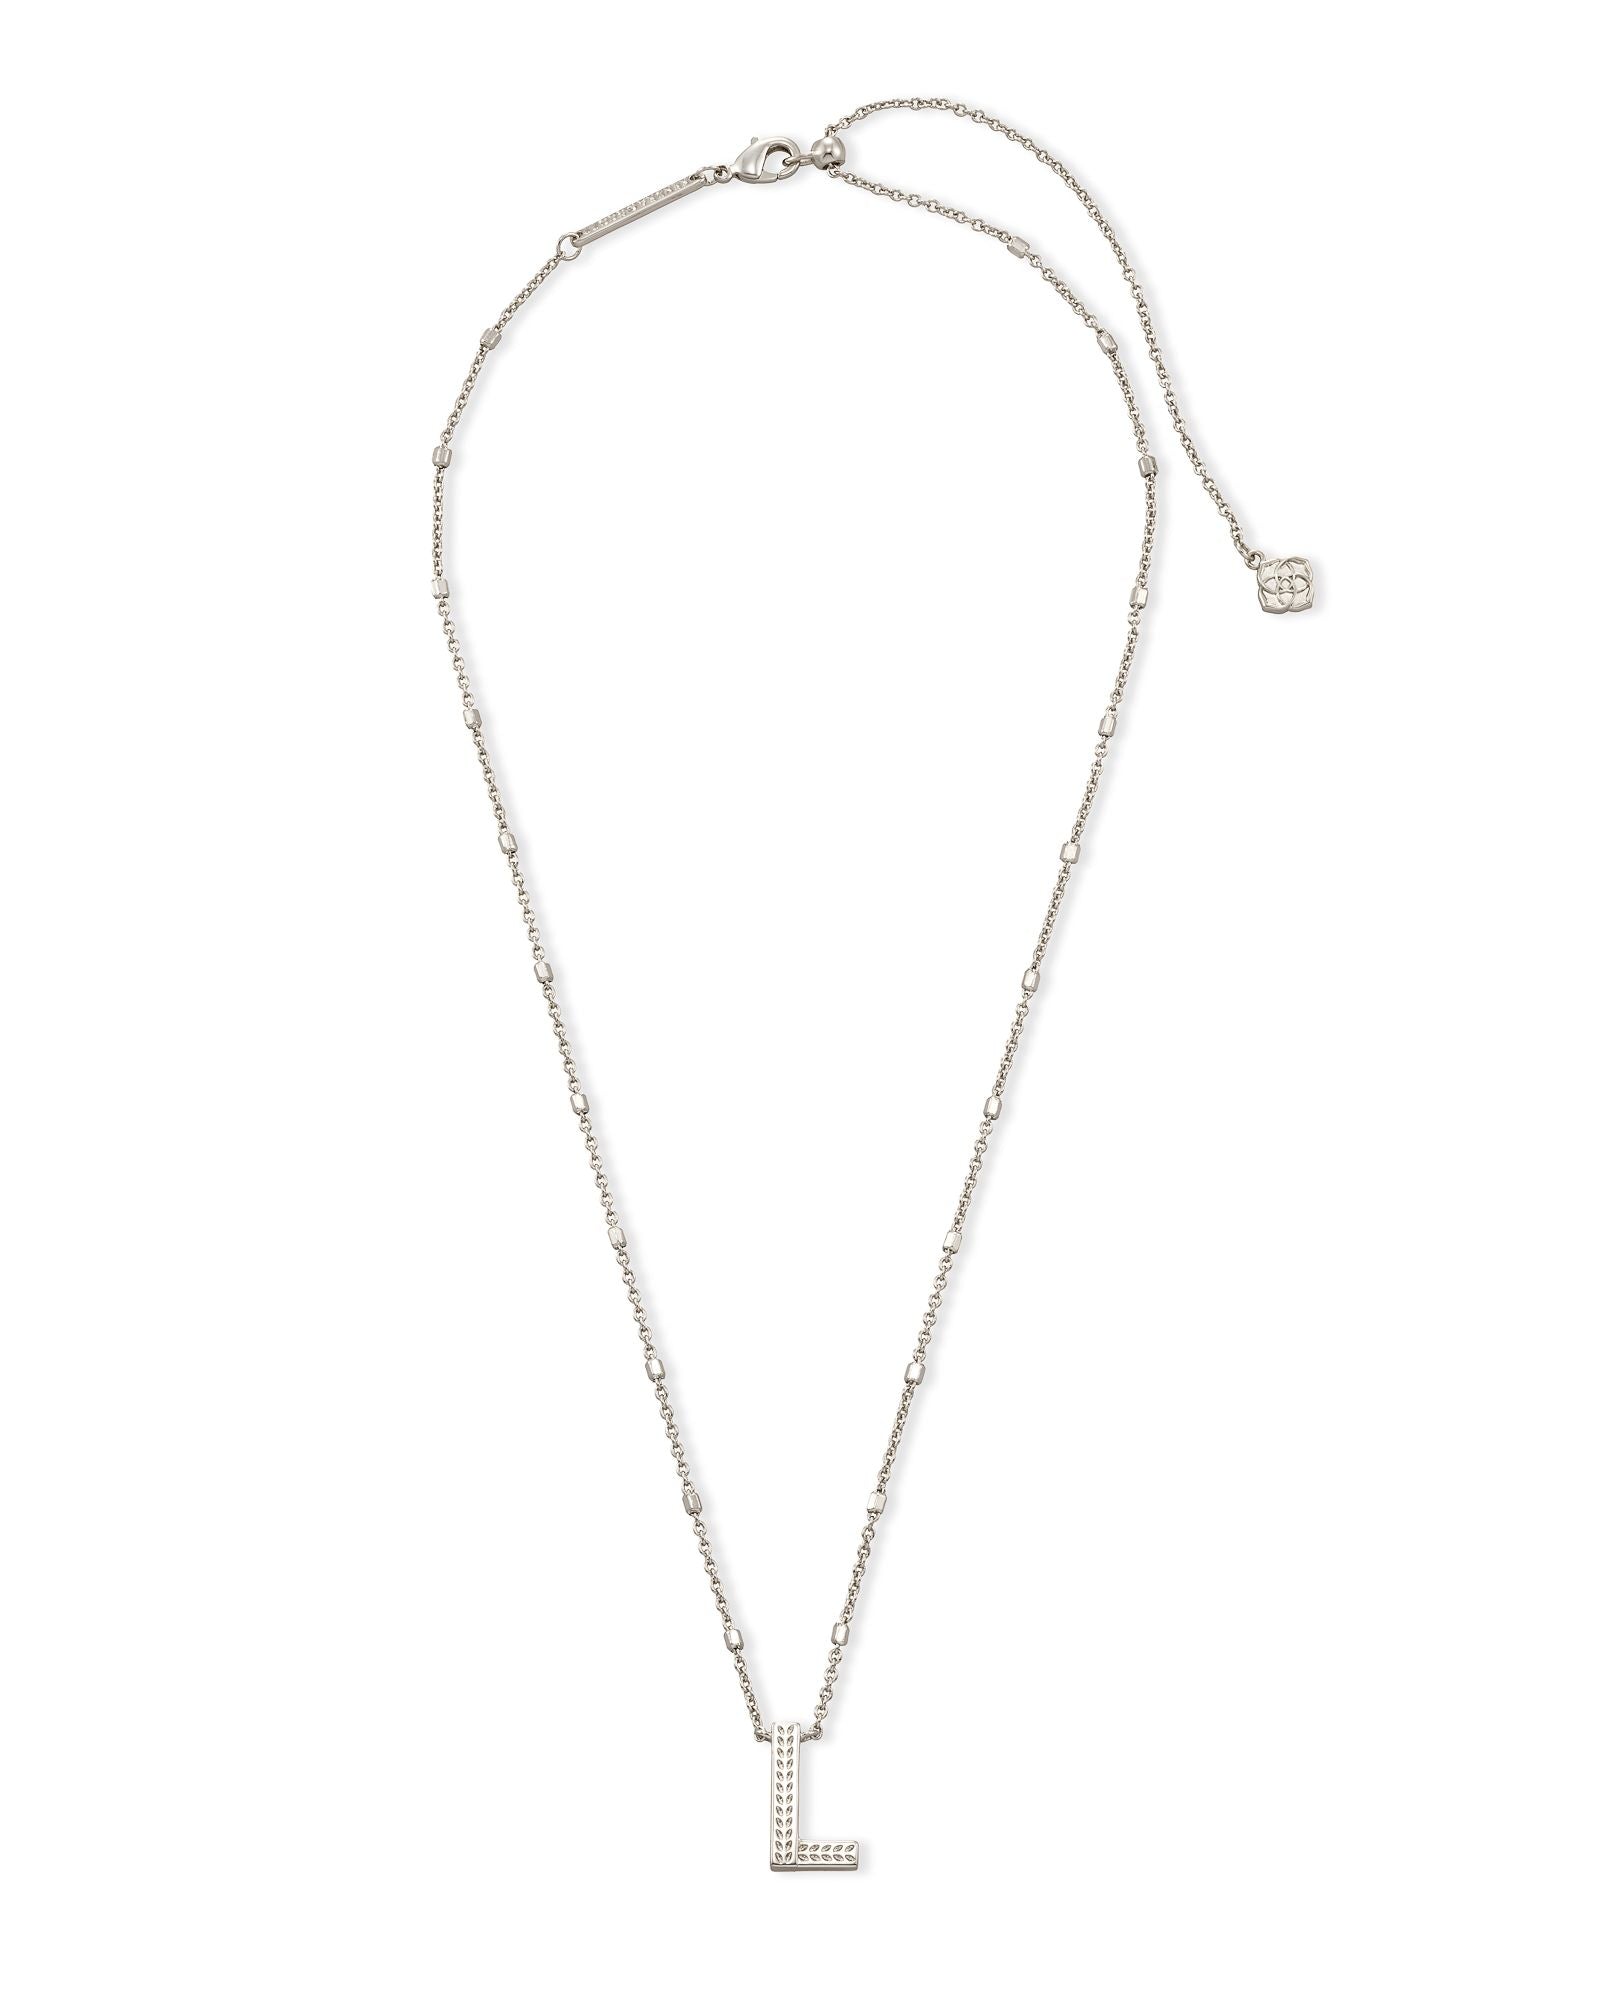 Kendra Scott Letter L Pendant Necklace Rhodium Metal-Necklaces-Kendra Scott-N1722RHD-L-The Twisted Chandelier